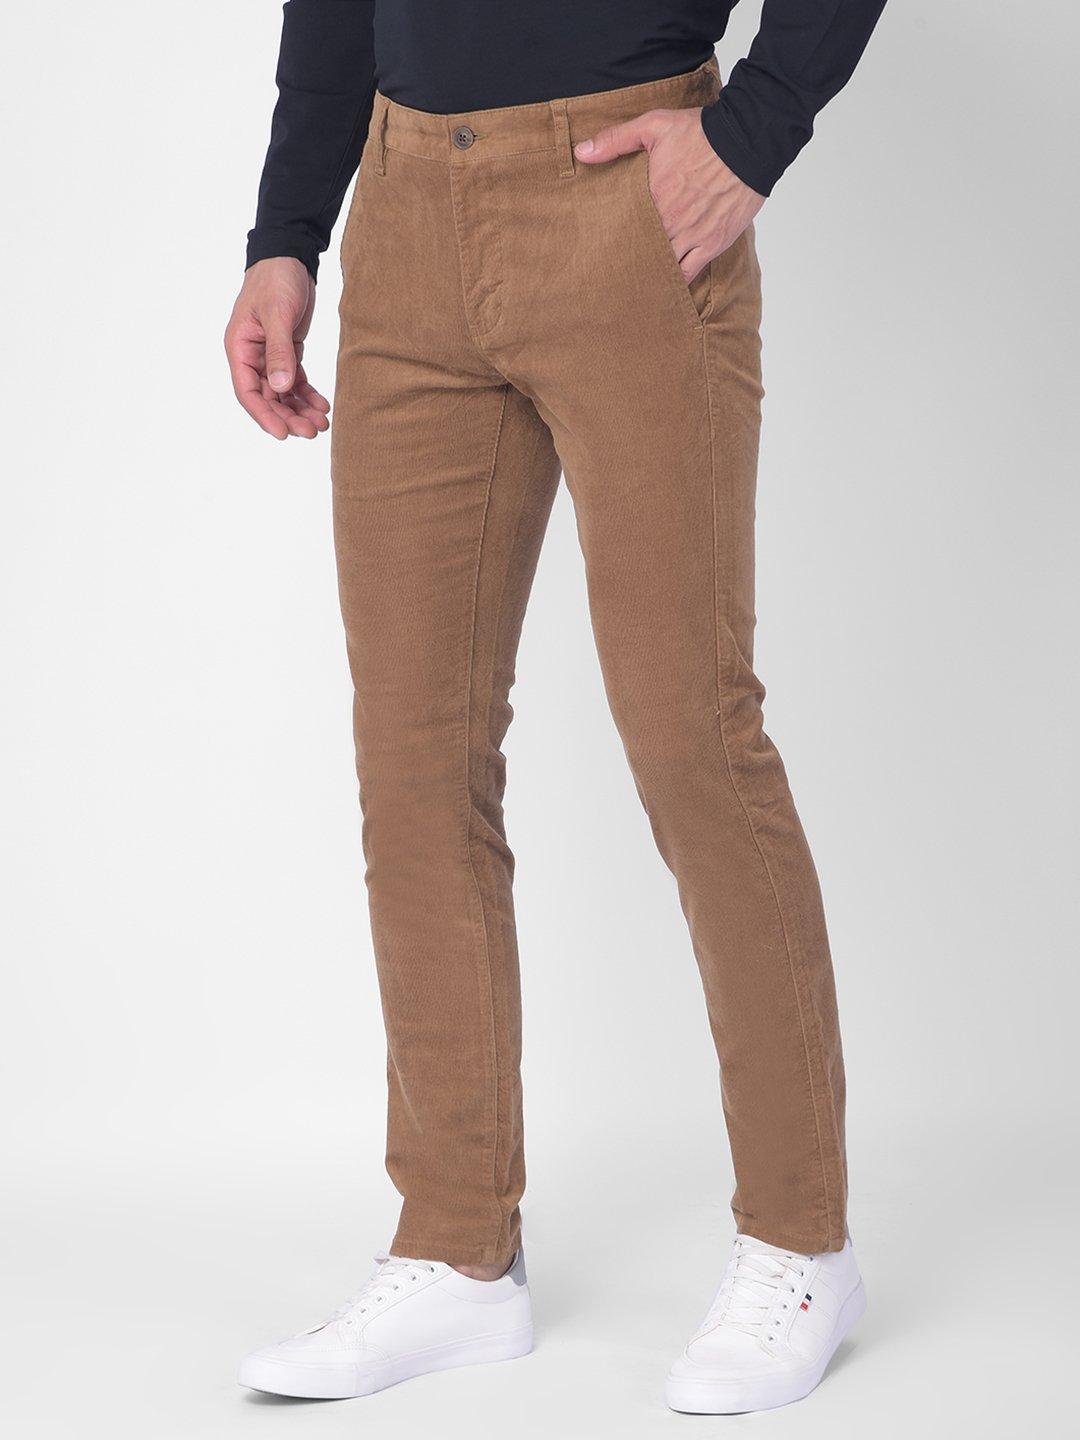 Buy HUDSON Men's Blake Slim Straight Leg Corduroy Pant, Olive Cord, 38  Regular at Amazon.in